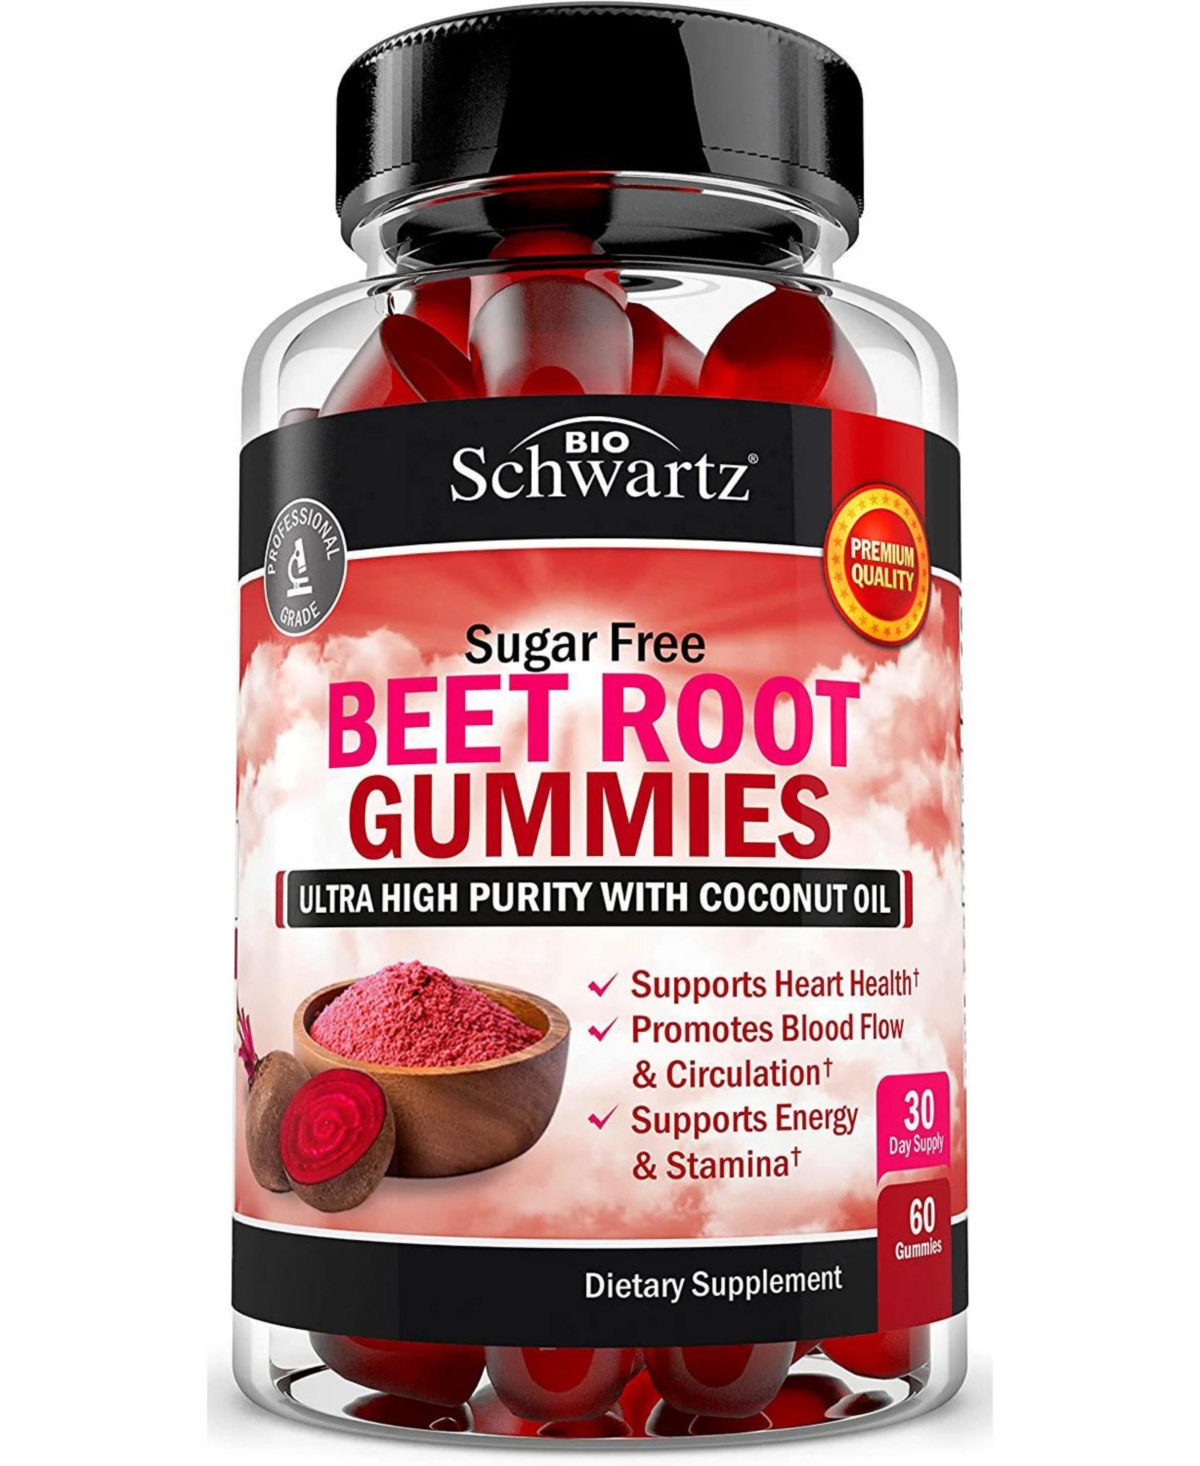 Sugar-Free Beet Root Gummies - Blood Pressure Support - Strawberry Flavor, 60 Count